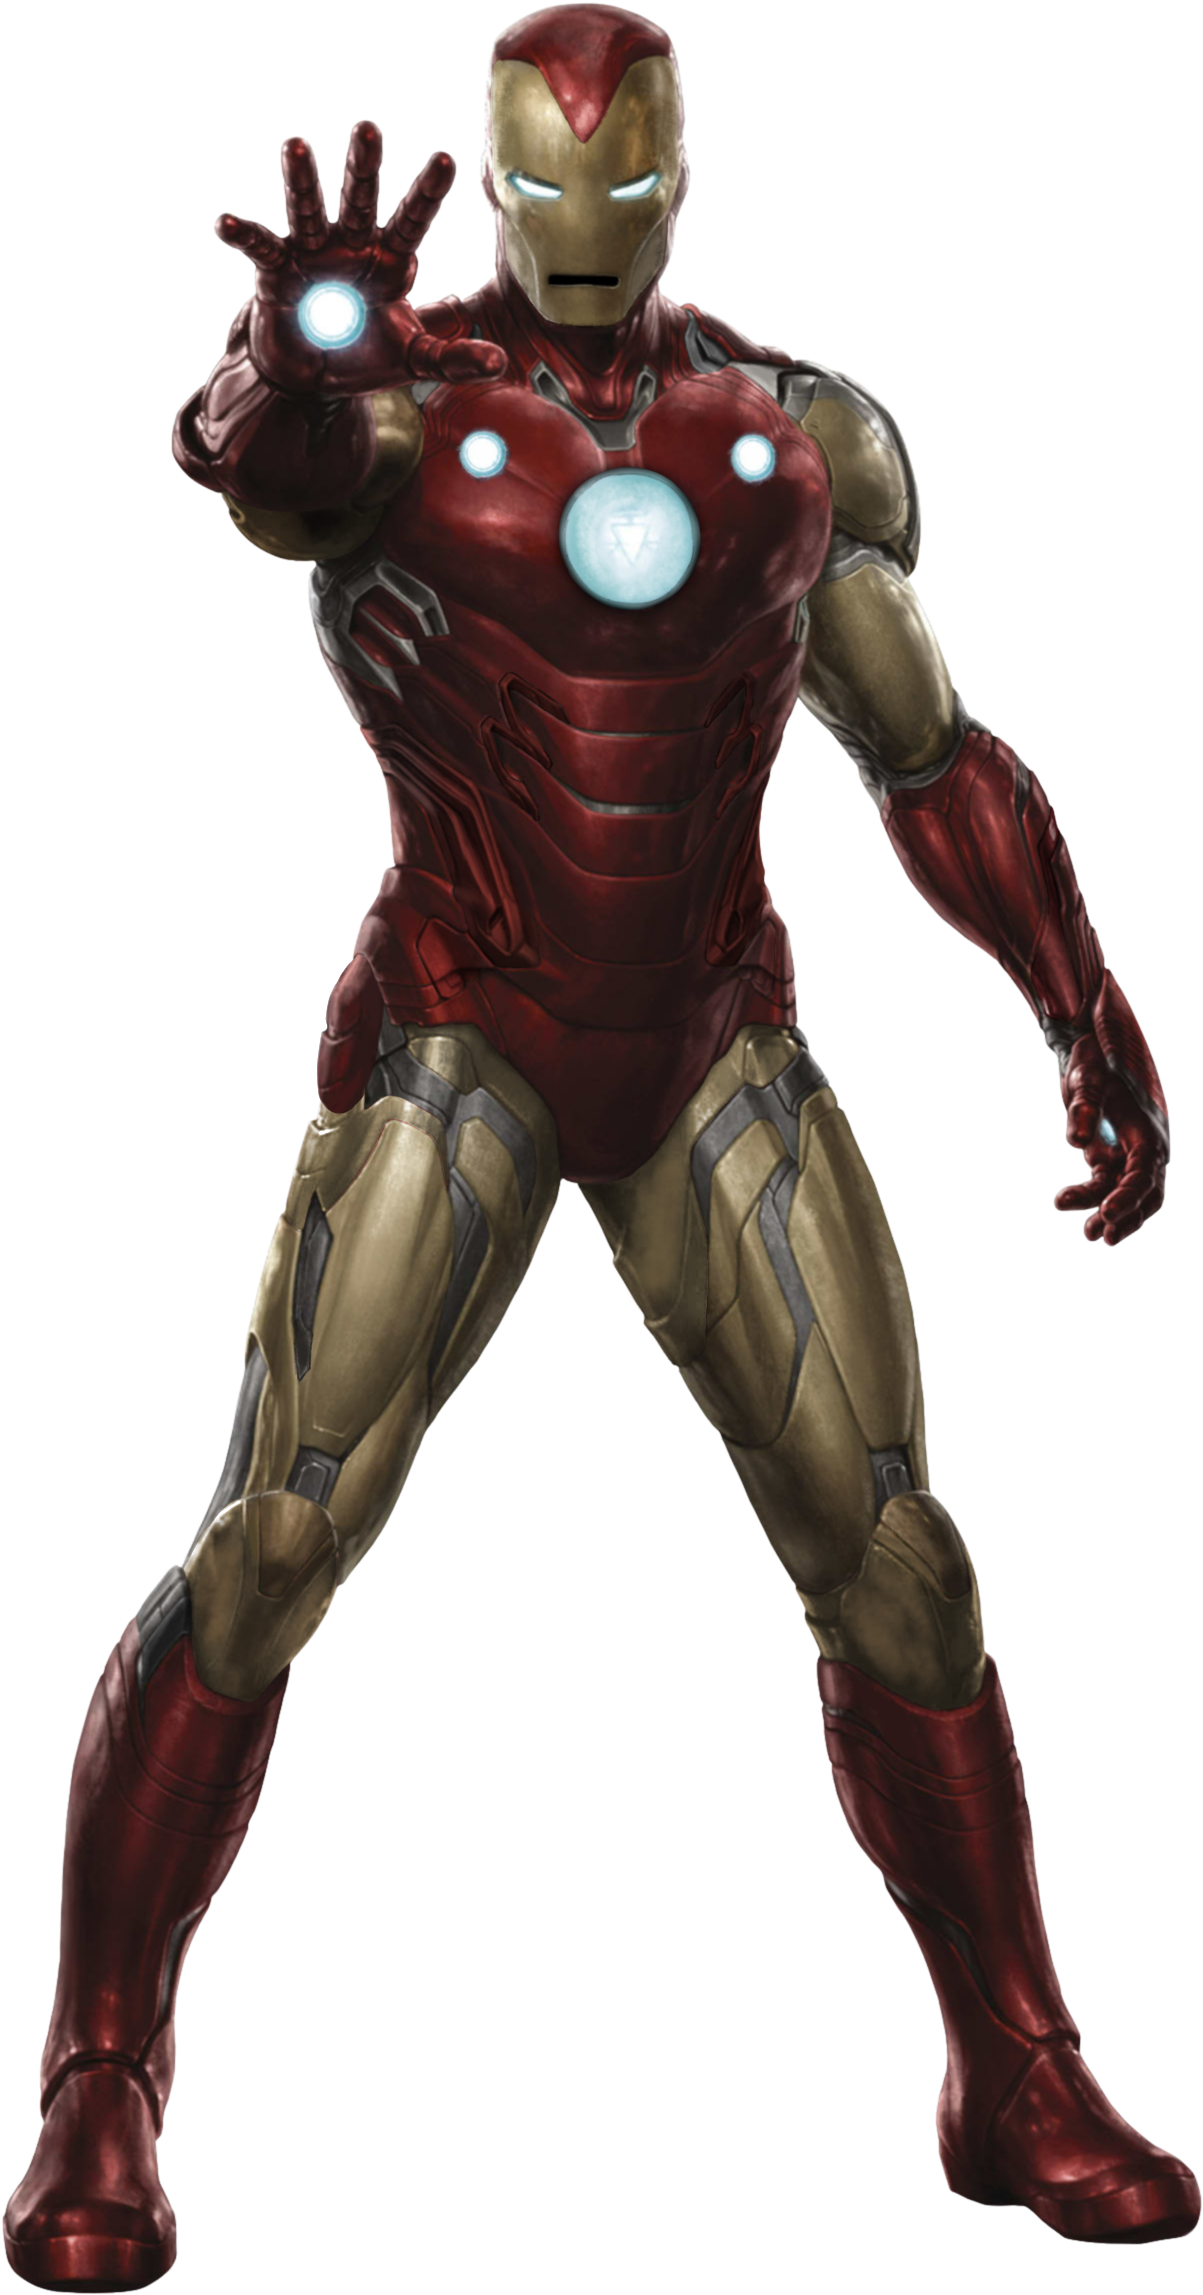 Man Infinity War Iron Marvel PNG Image